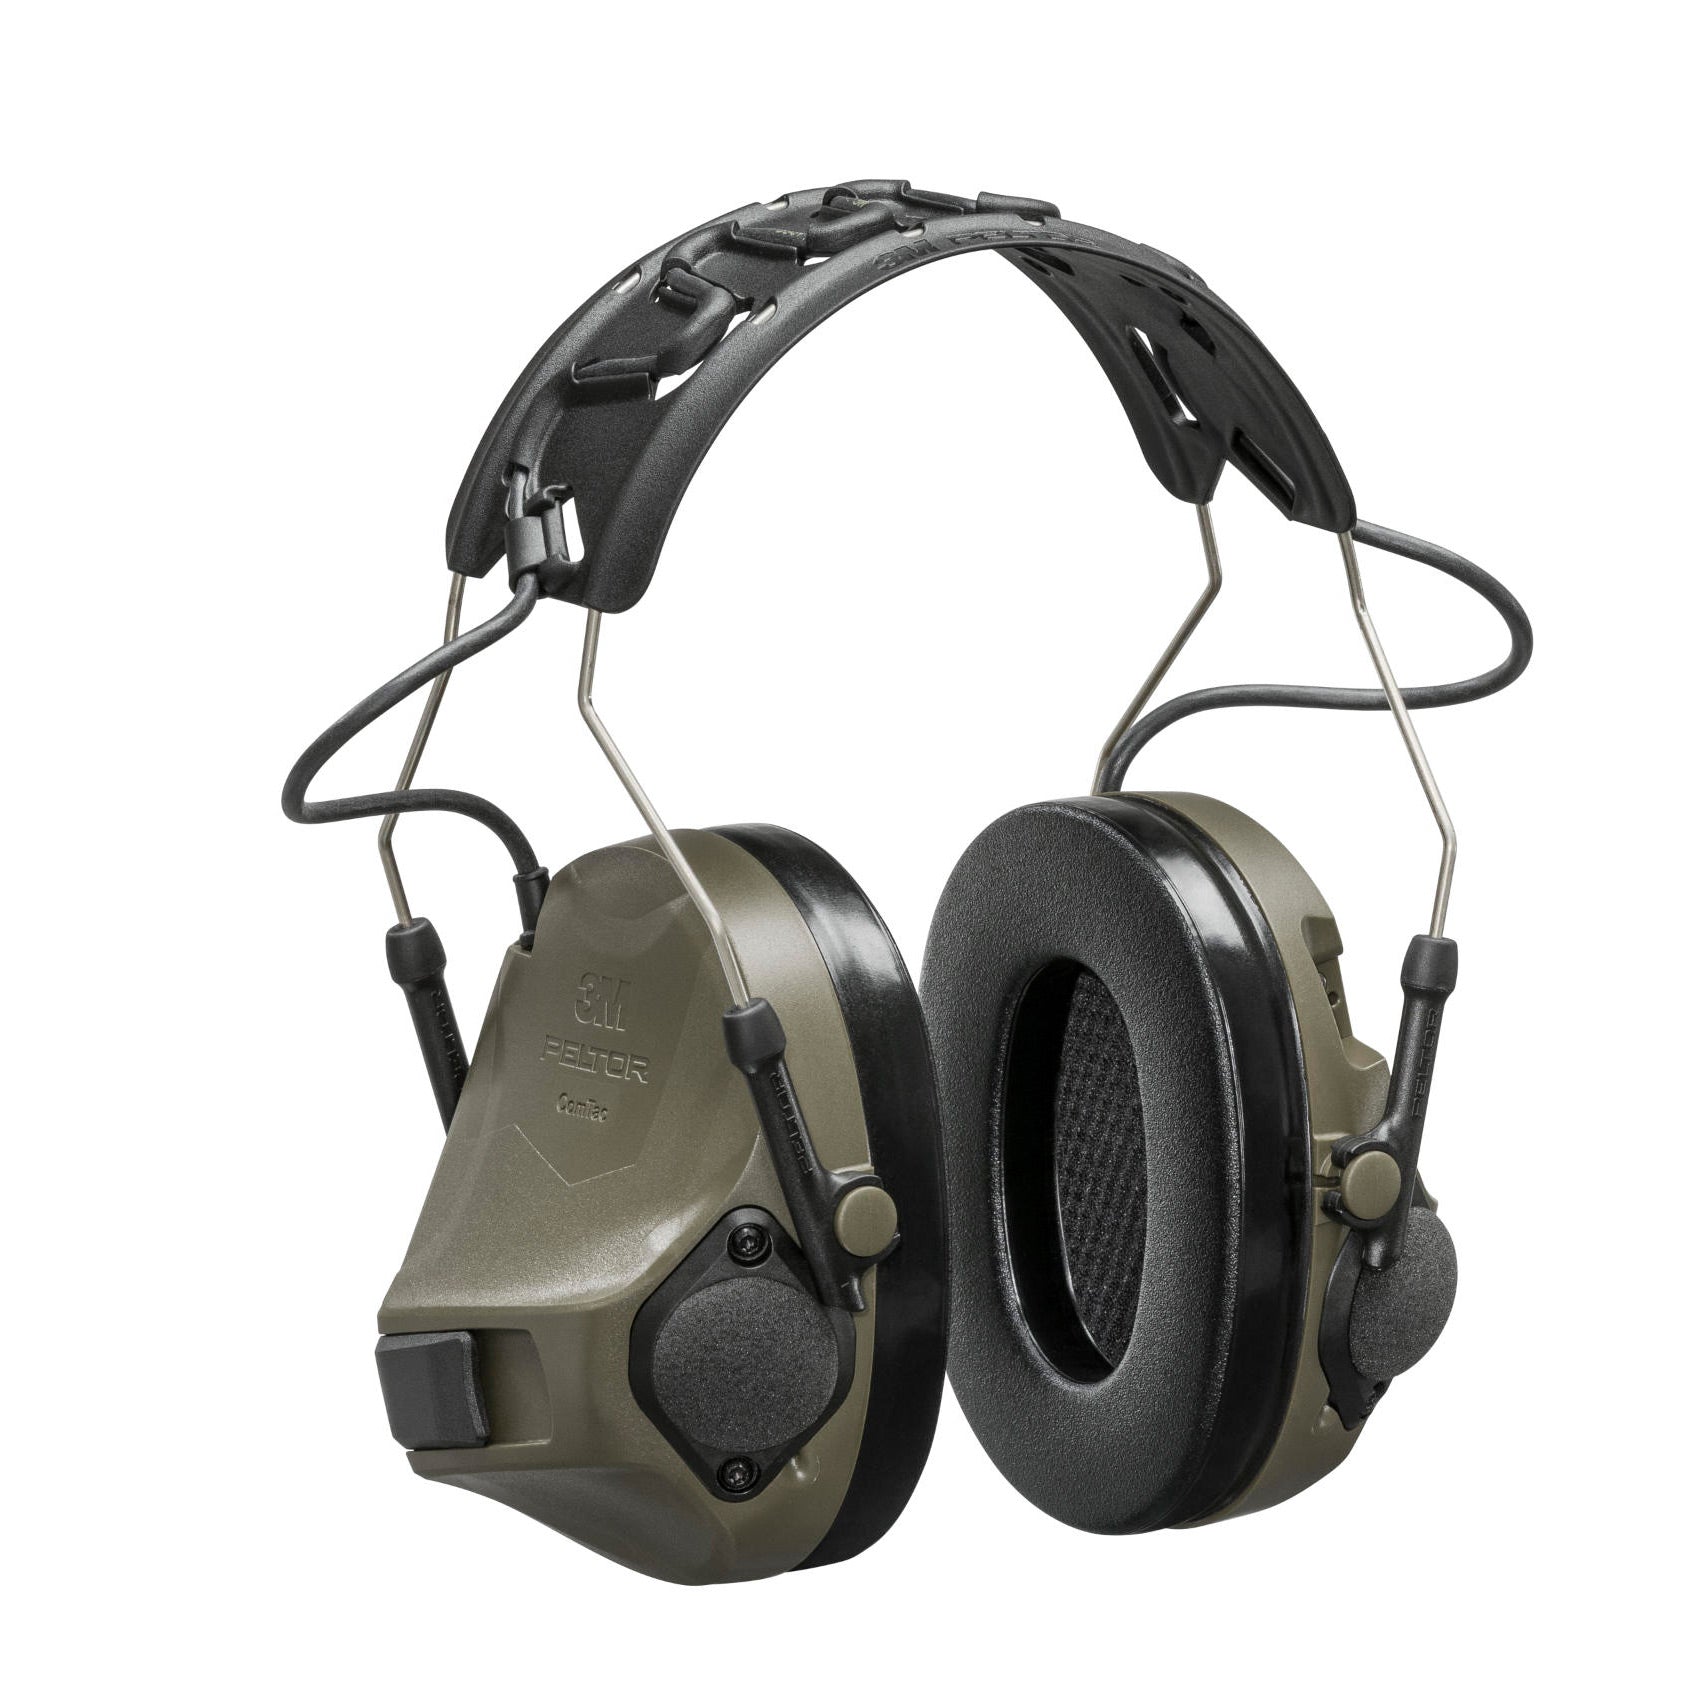 3M Peltor™ Protection auditive ComTac VIII - vert